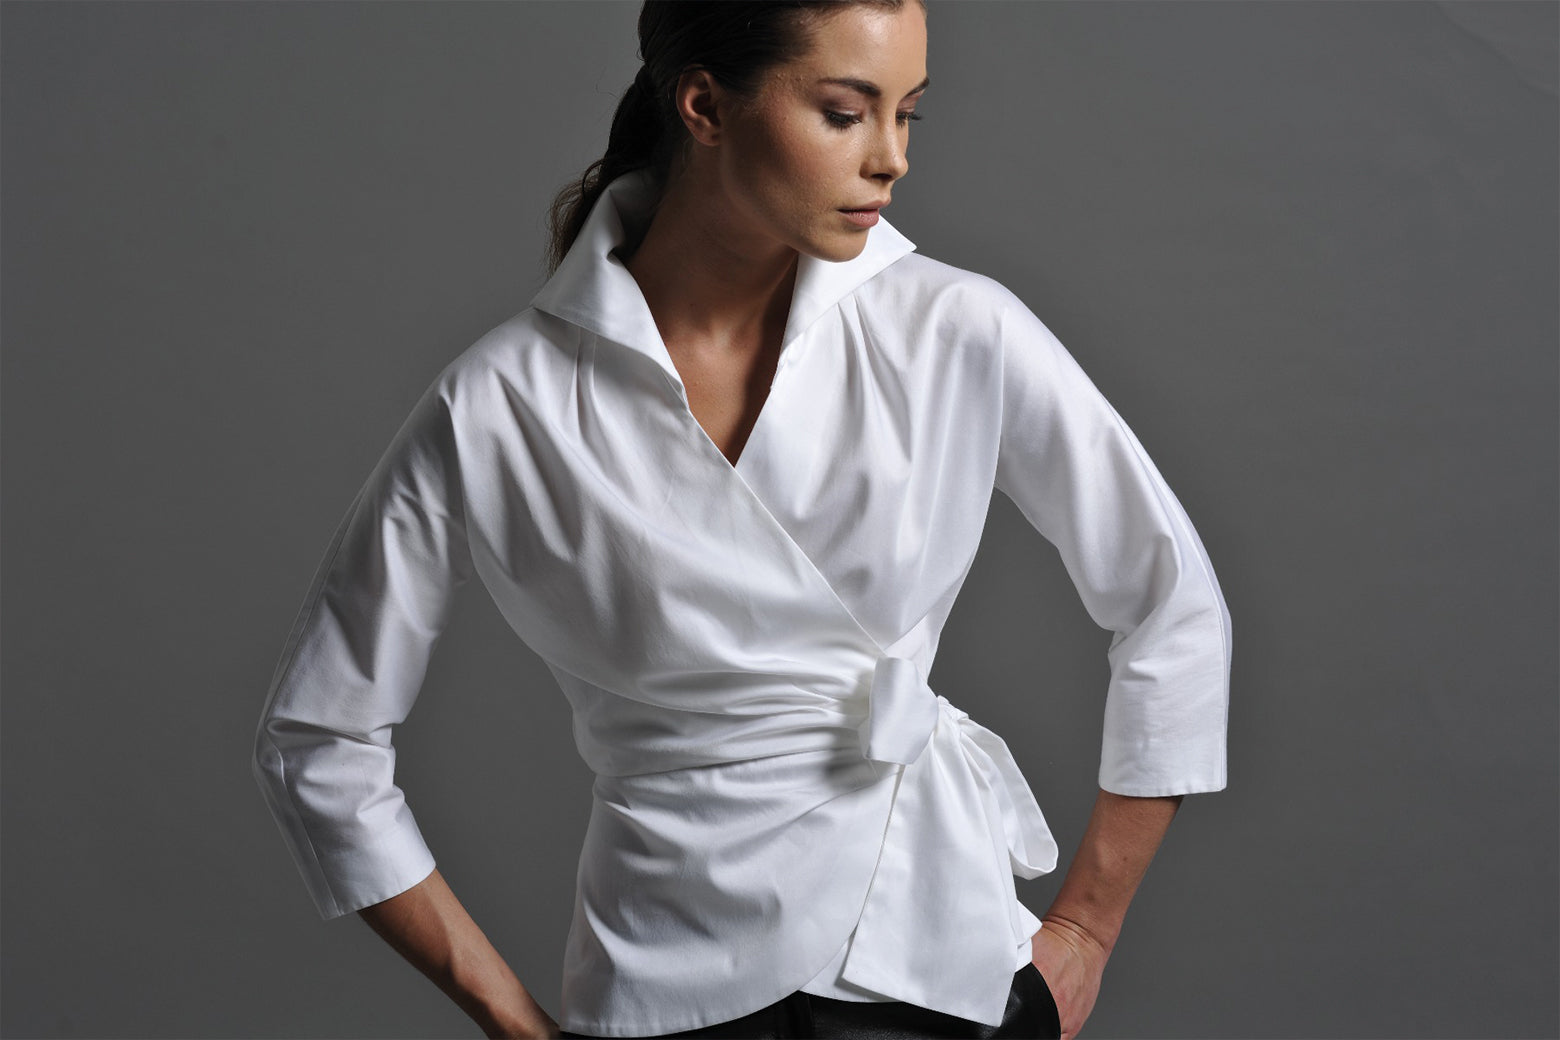 Buttoned wrap blouse - Women